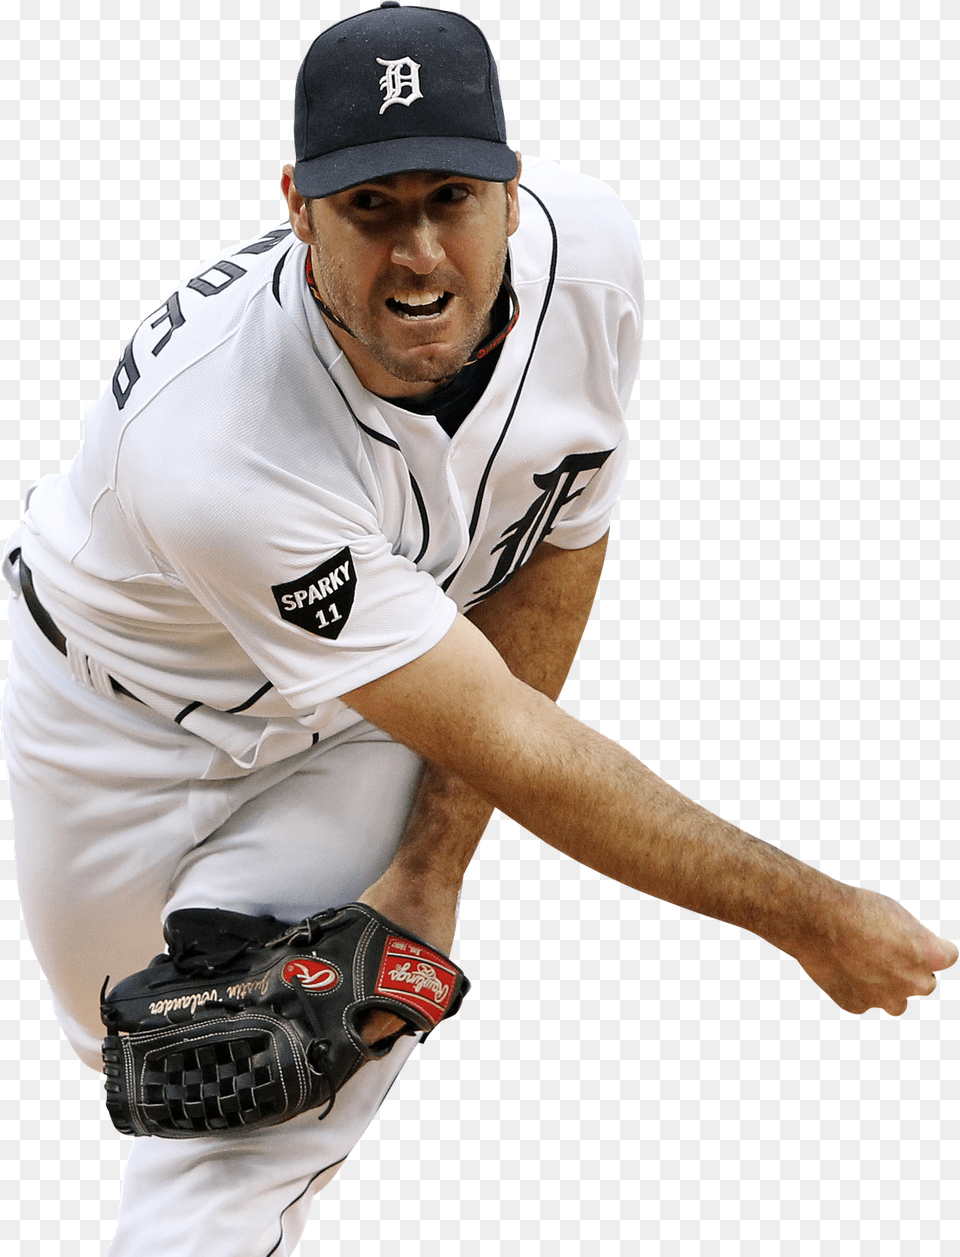 Baseball Player Purepng Fr Baseball Pitcher Background, Baseball Glove, Clothing, Glove, Sport Png Image